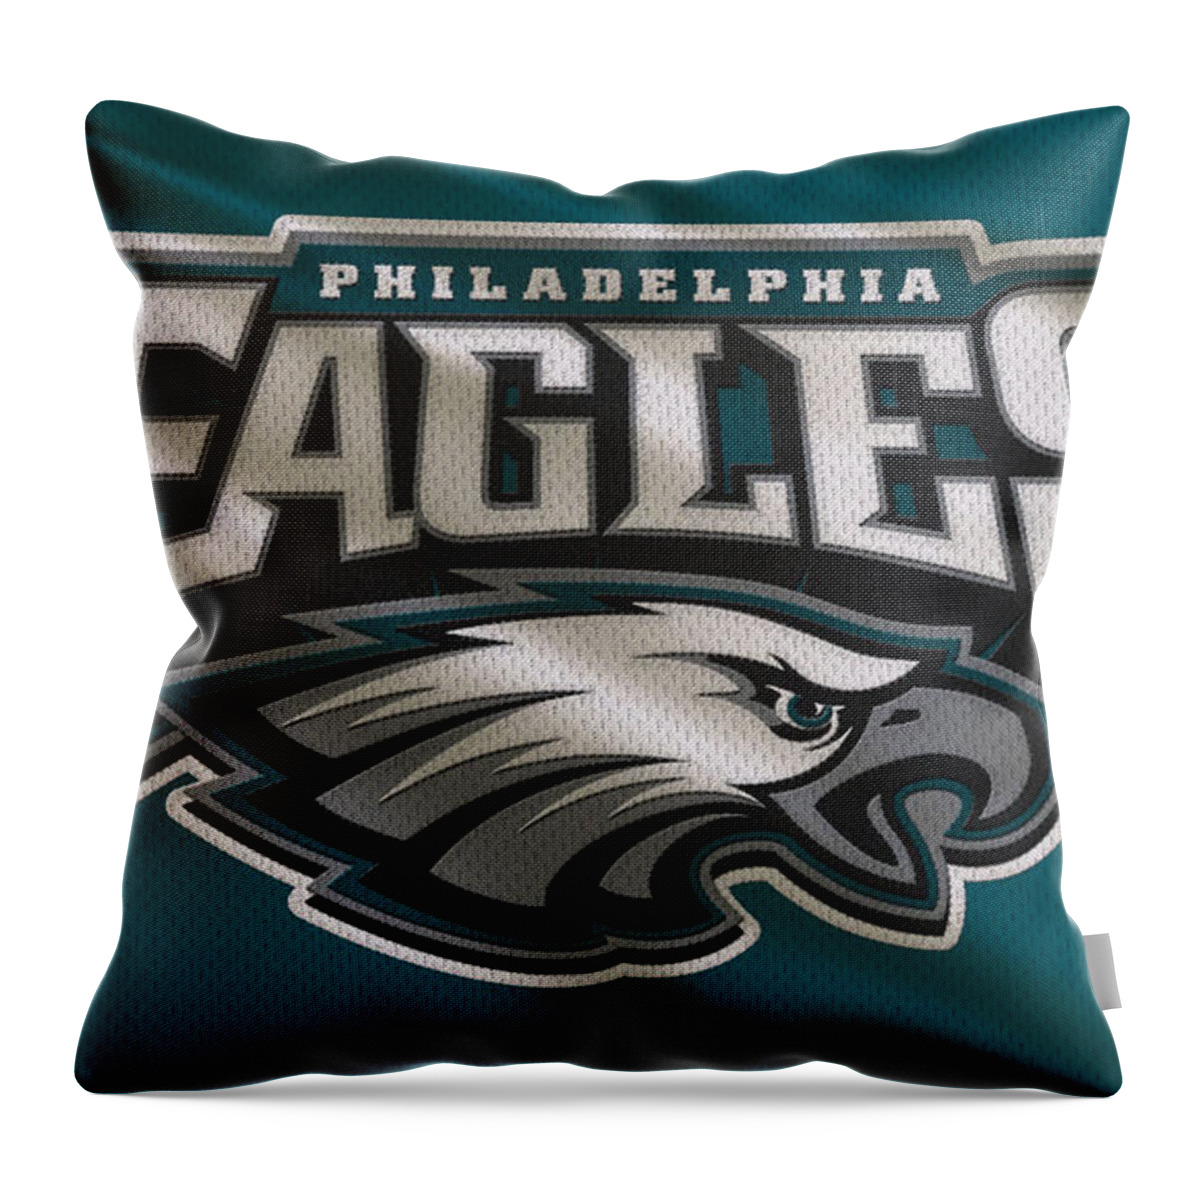 Eagles Throw Pillow featuring the photograph Philadelphia Eagles Uniform by Joe Hamilton